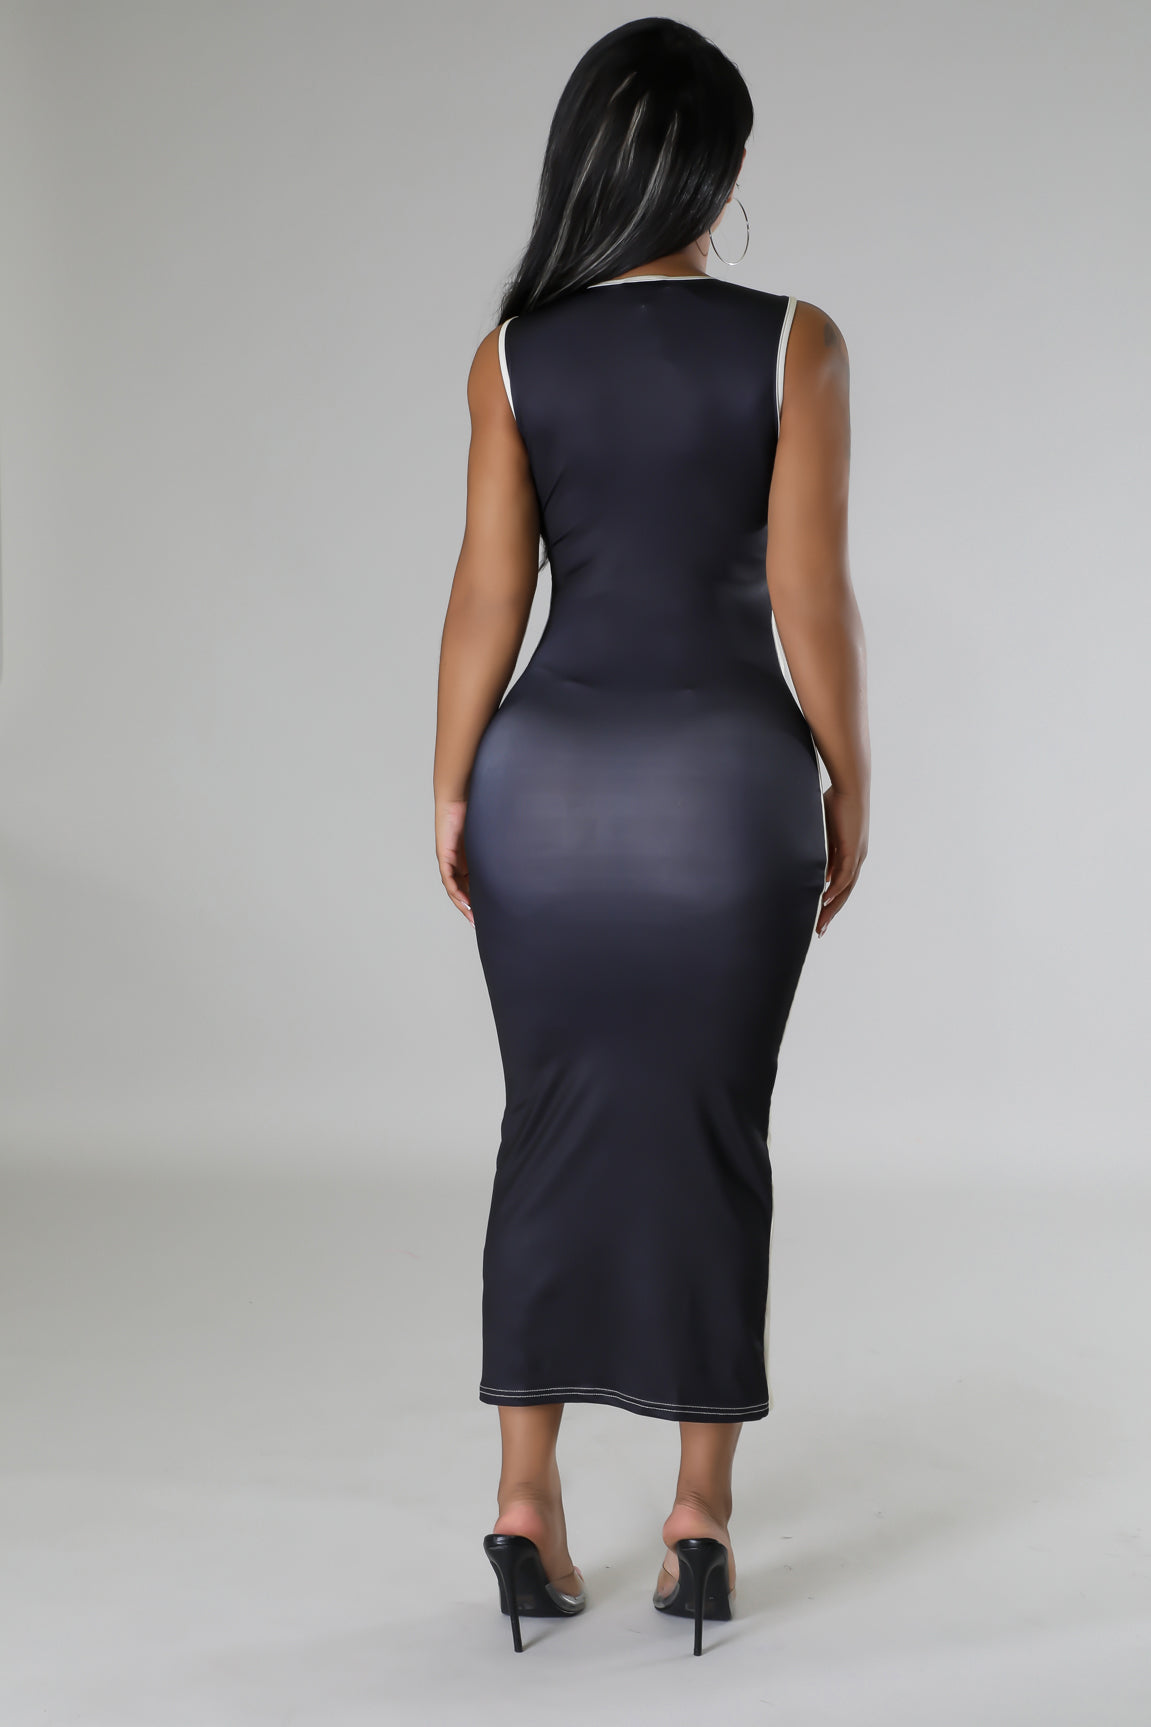 3D Print Sleeveless Bodycon Midi Dress - Mint Leafe Boutique 